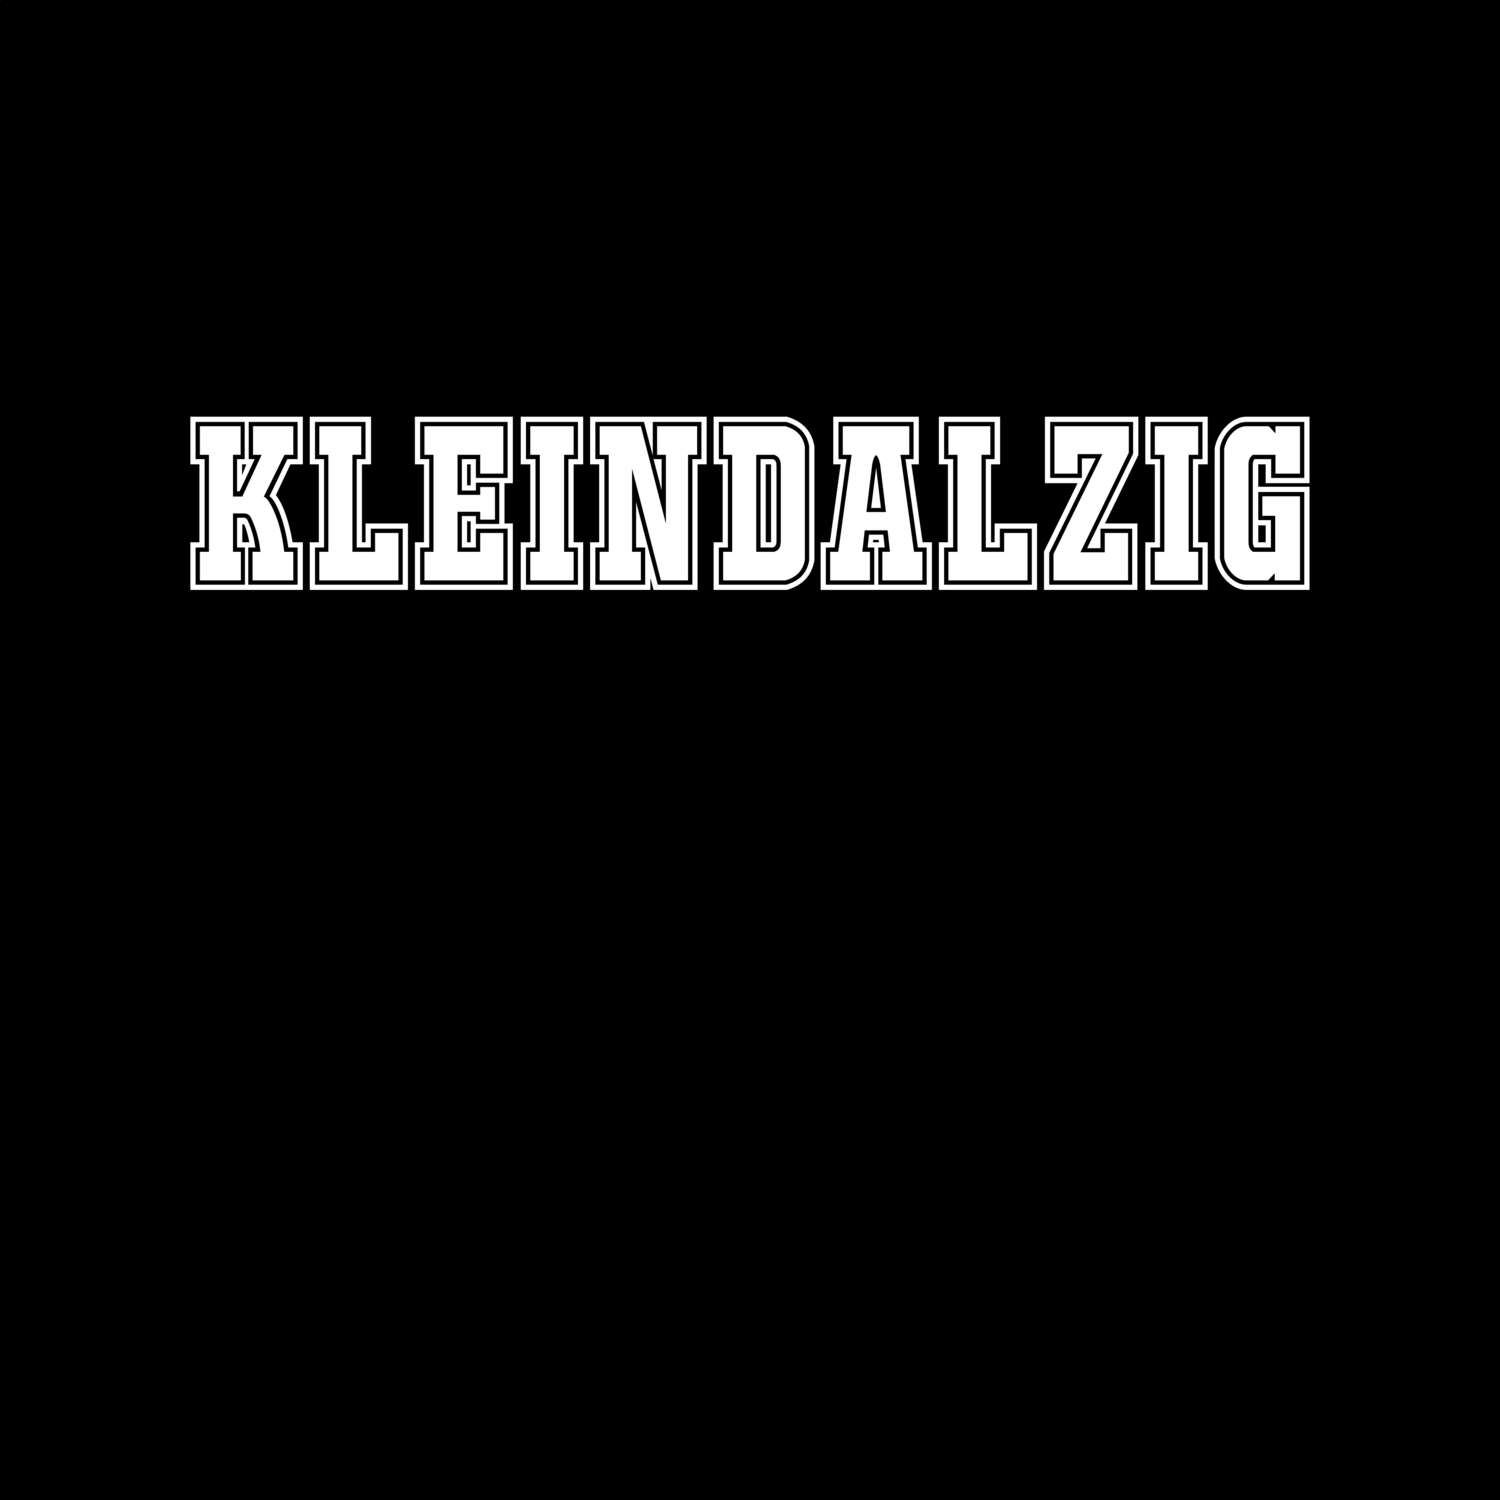 Kleindalzig T-Shirt »Classic«